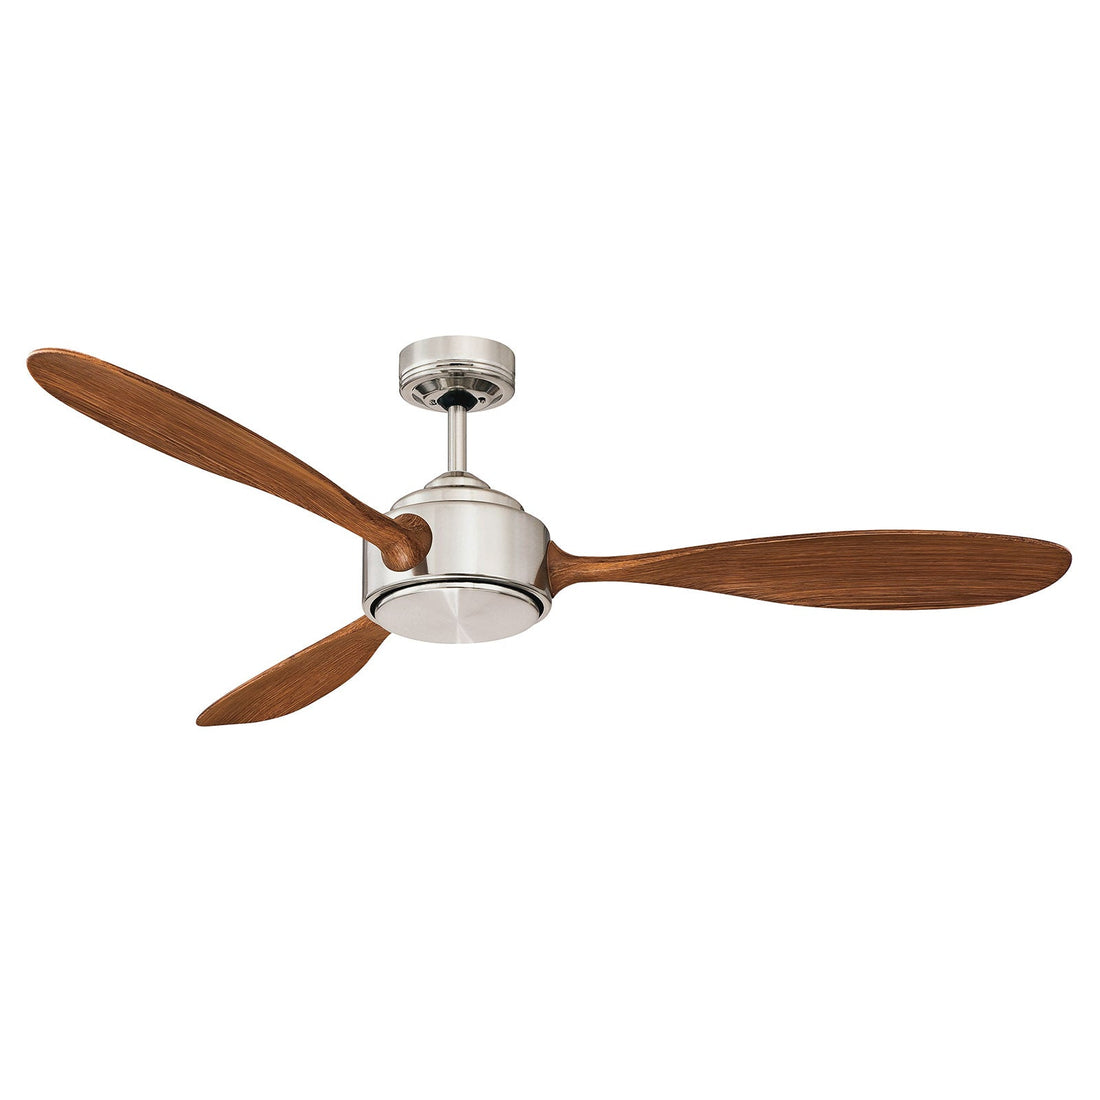 Duxton 130cm AC Ceiling Fan